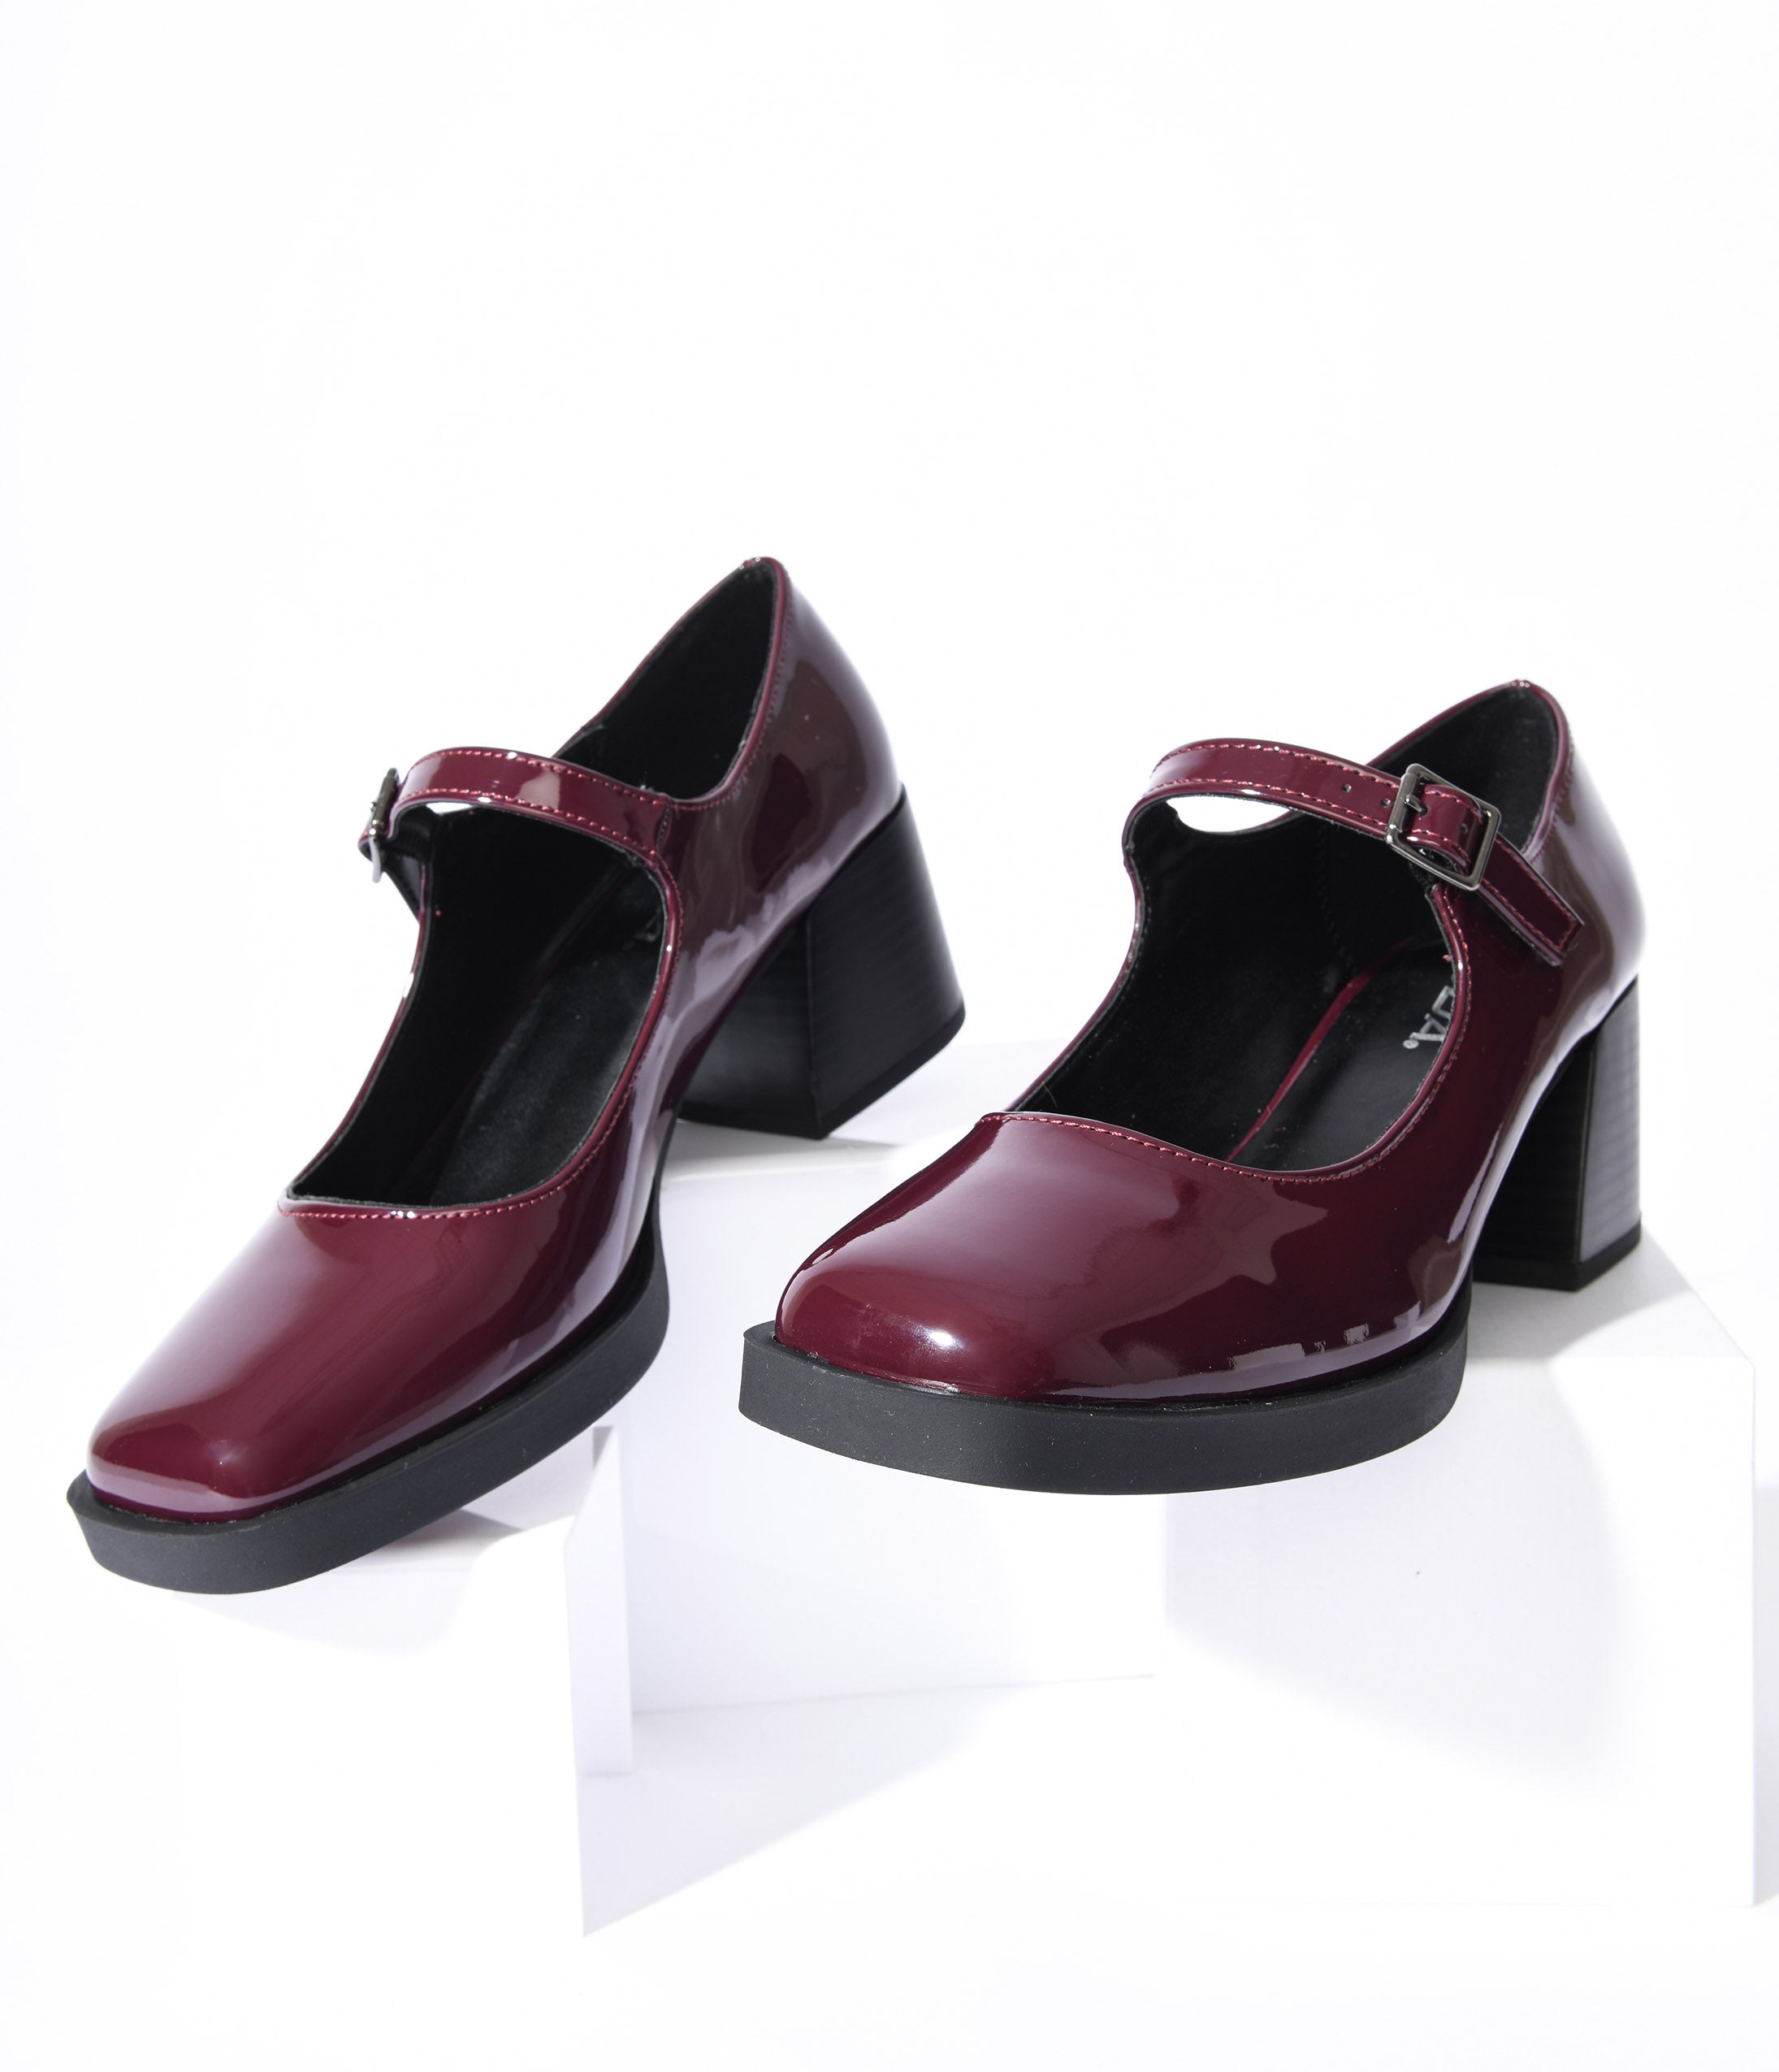 Burgundy Satin Block Heel with Satin Back Bow - Women Shoes, Wedding Shoes